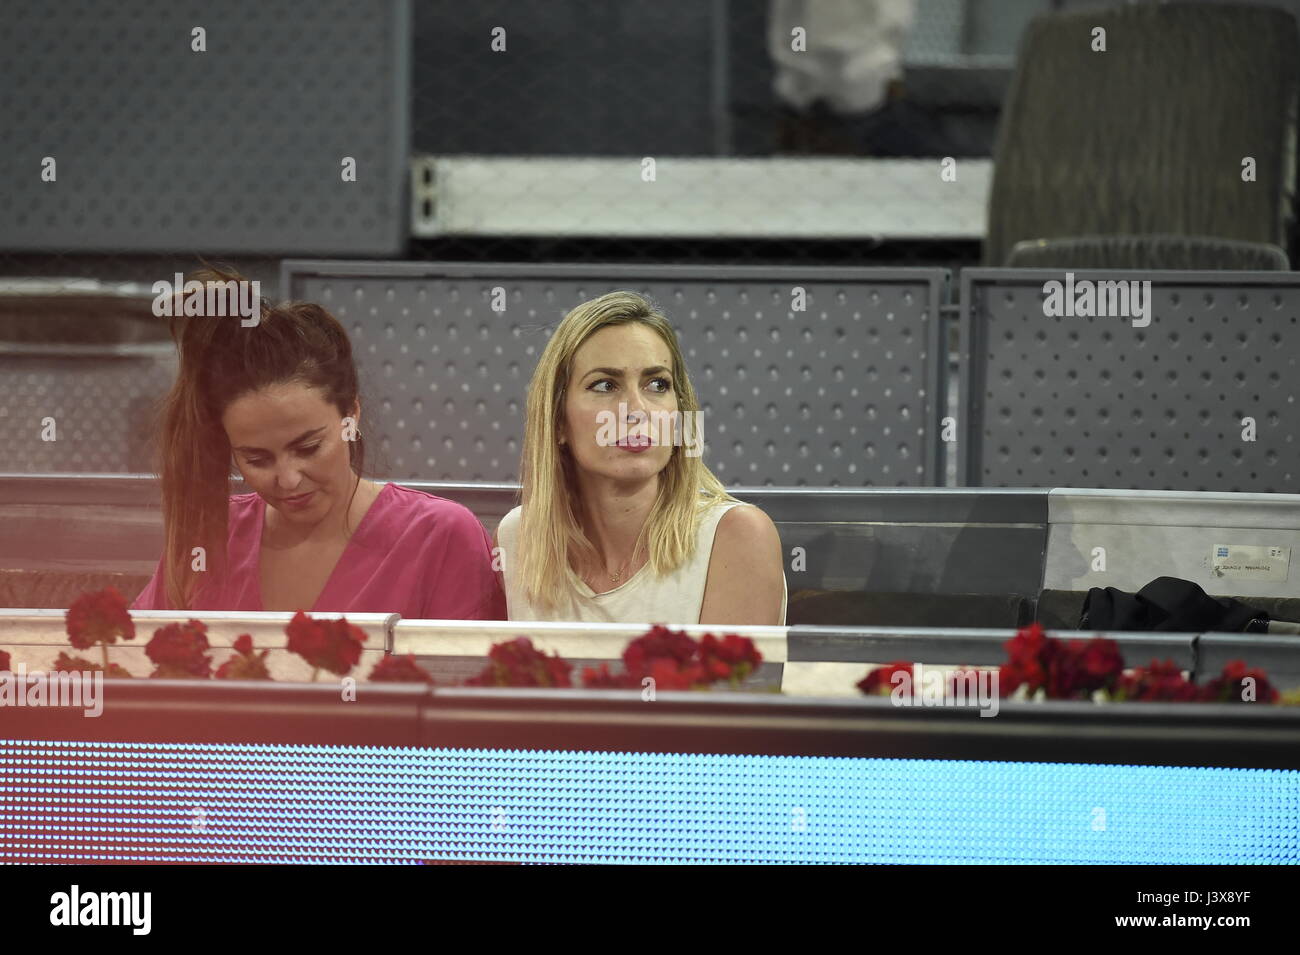 Madrid, Spagna. 8 Maggio, 2017. L'attrice Kira Miro durante il match Mutua Madrid Open a Madrid lunedì 8 maggio 2017. Credito: Gtres Información más Comuniación on line,S.L./Alamy Live News Foto Stock